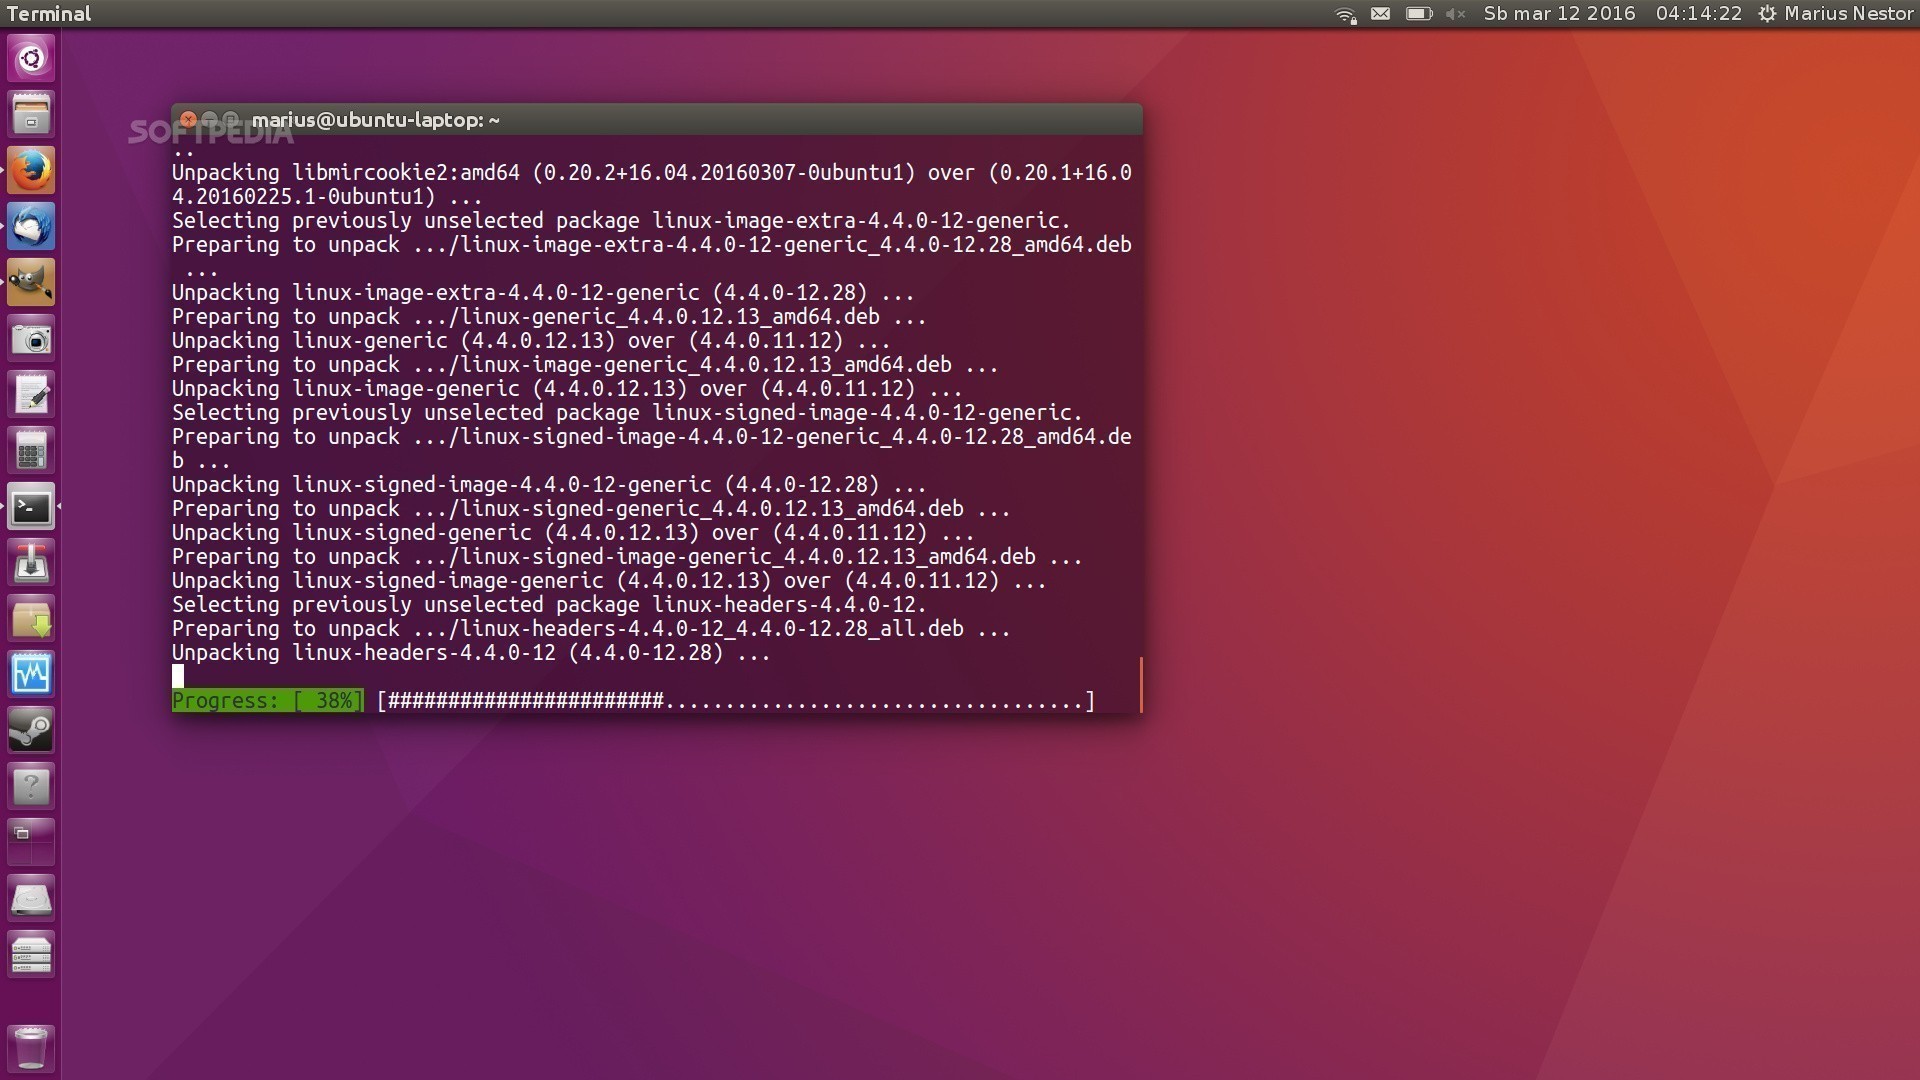 broadcom 43142 driver linux ubuntu 16.04